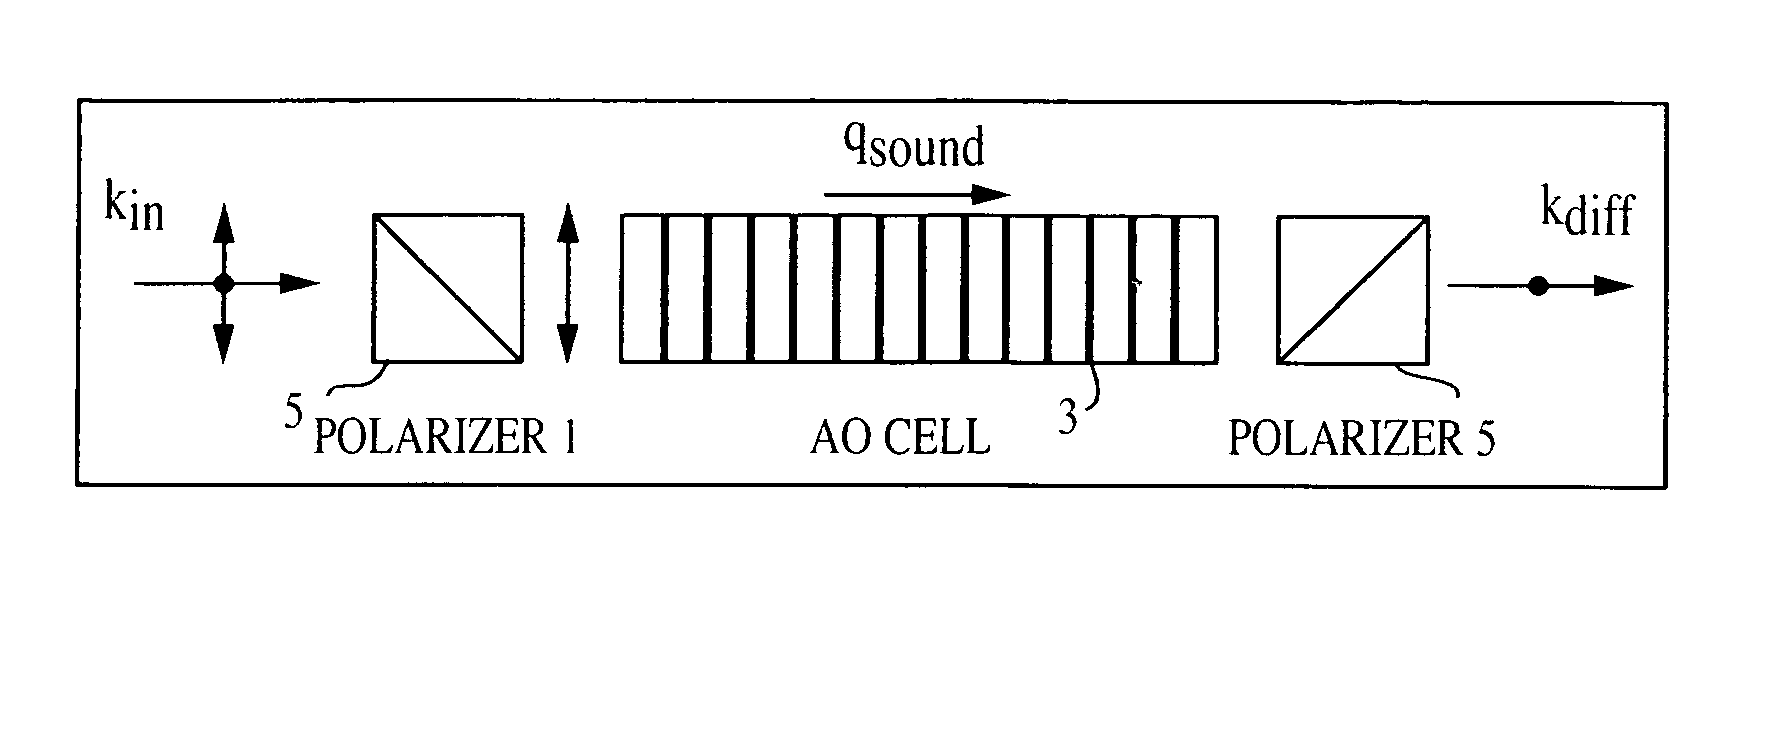 Portable acousto-optical spectrometers